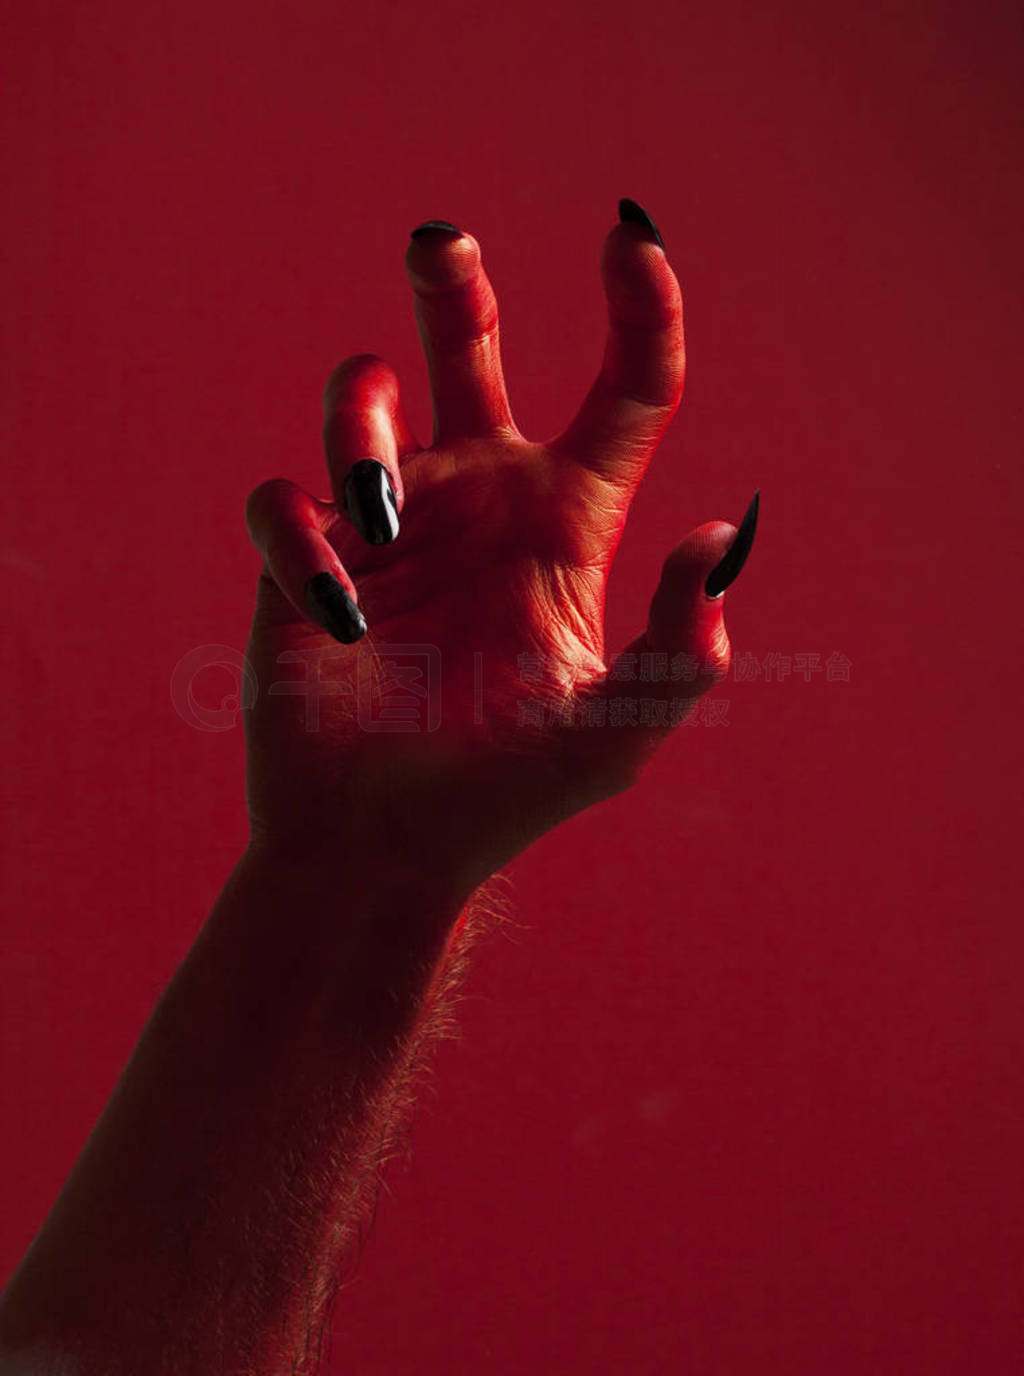 Halloween red devil monster hand with black fingernails against